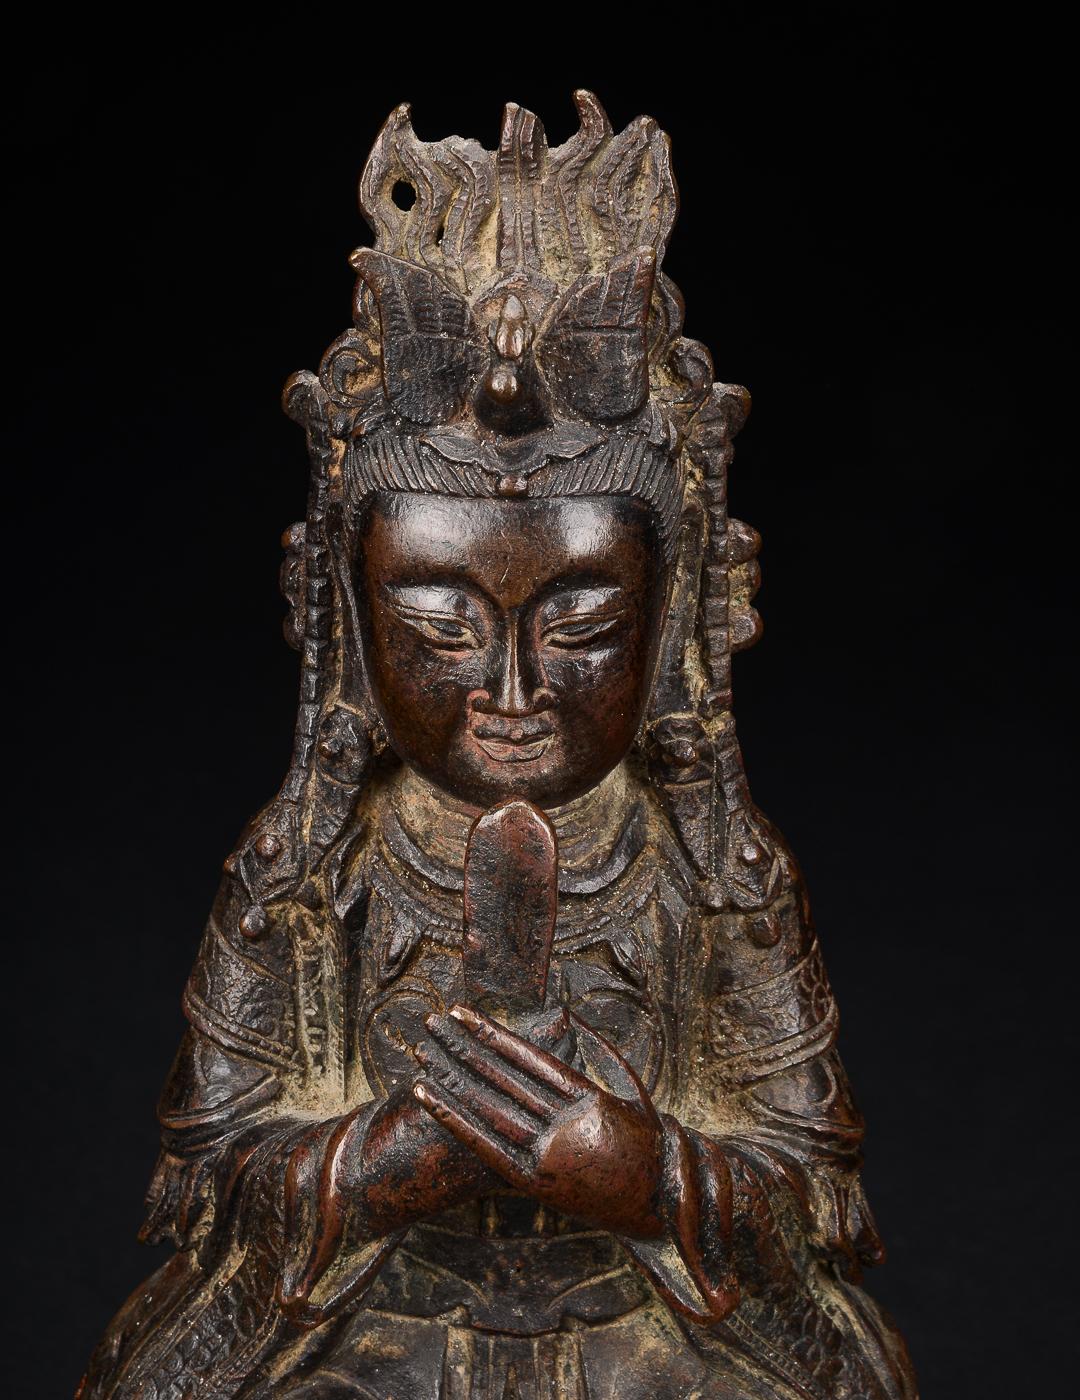 Chinese Bixia Yuanjun Figure of Bronze Dated Ming Dynasty, 1368-1644 For Sale